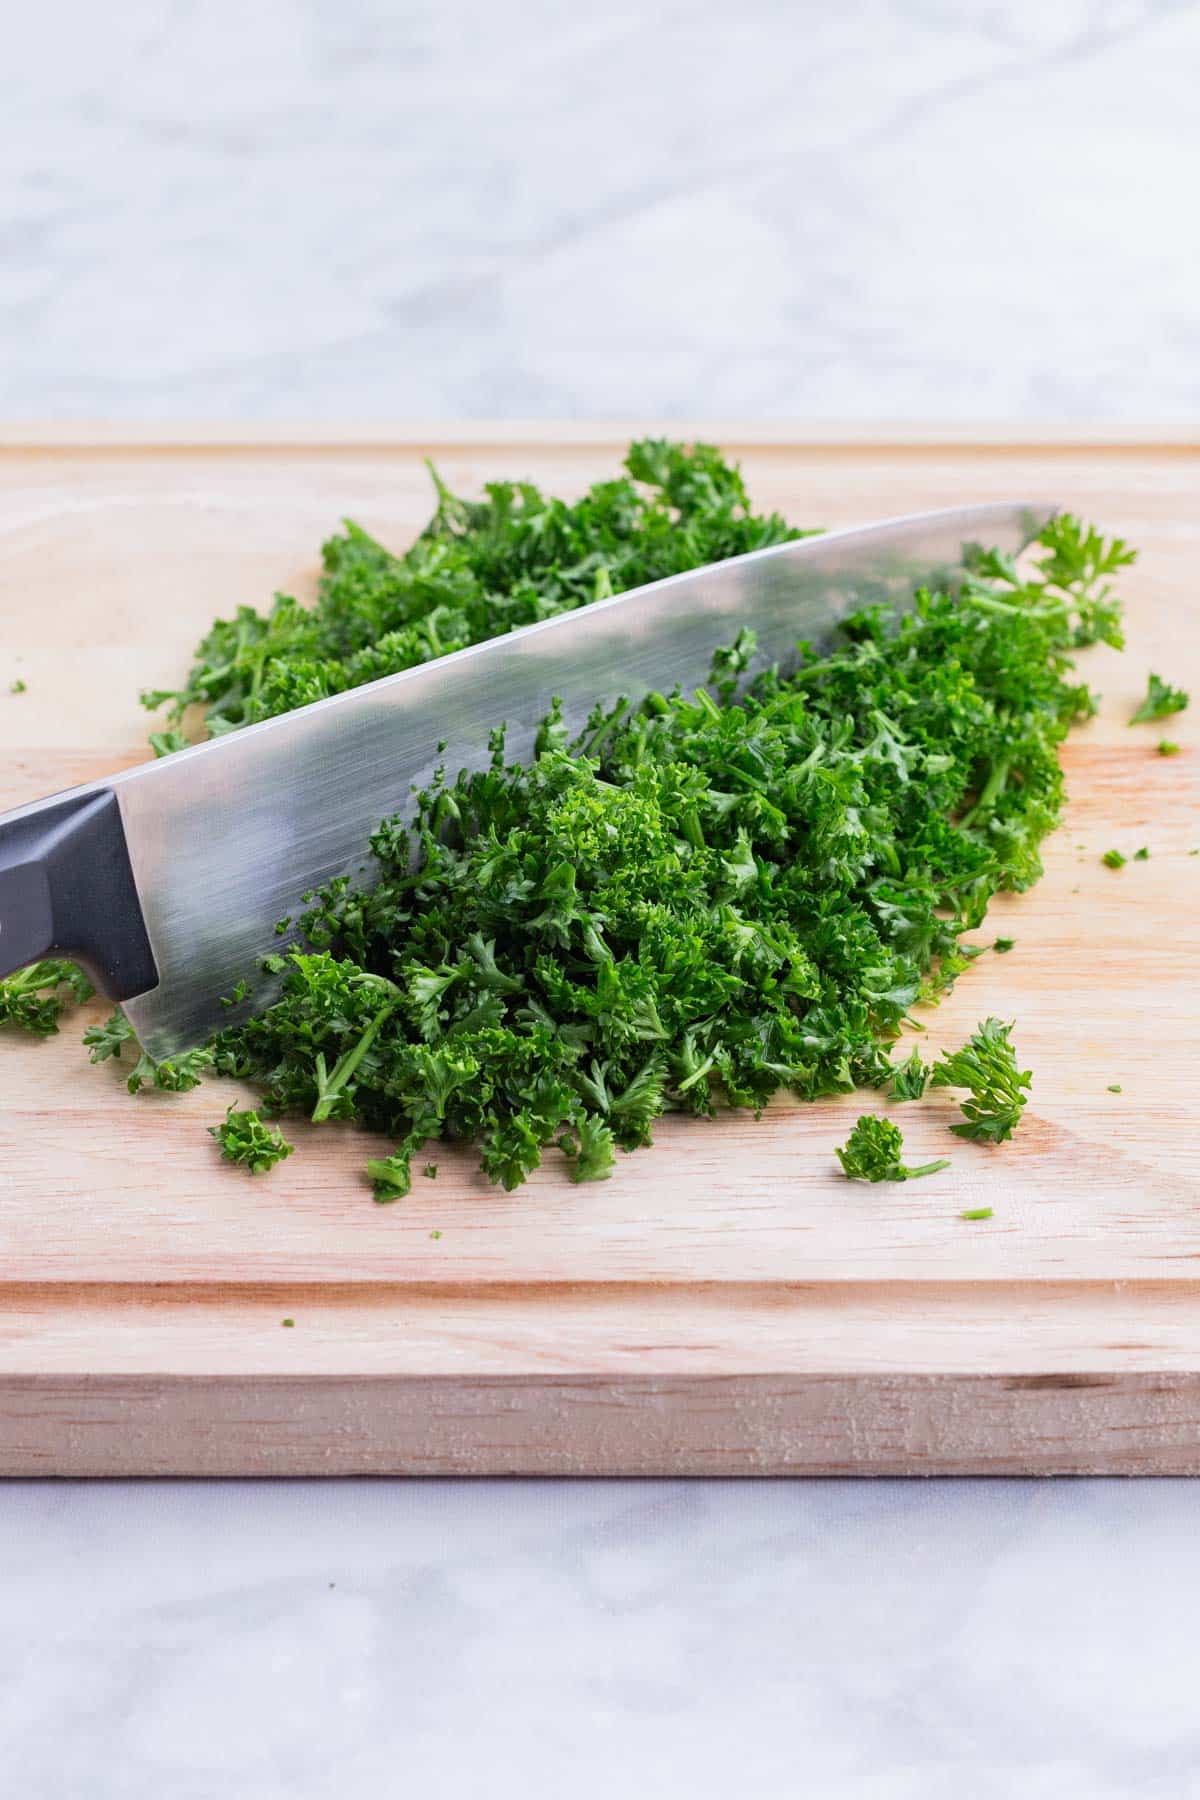 A sharp knife chops a pile of parsley.